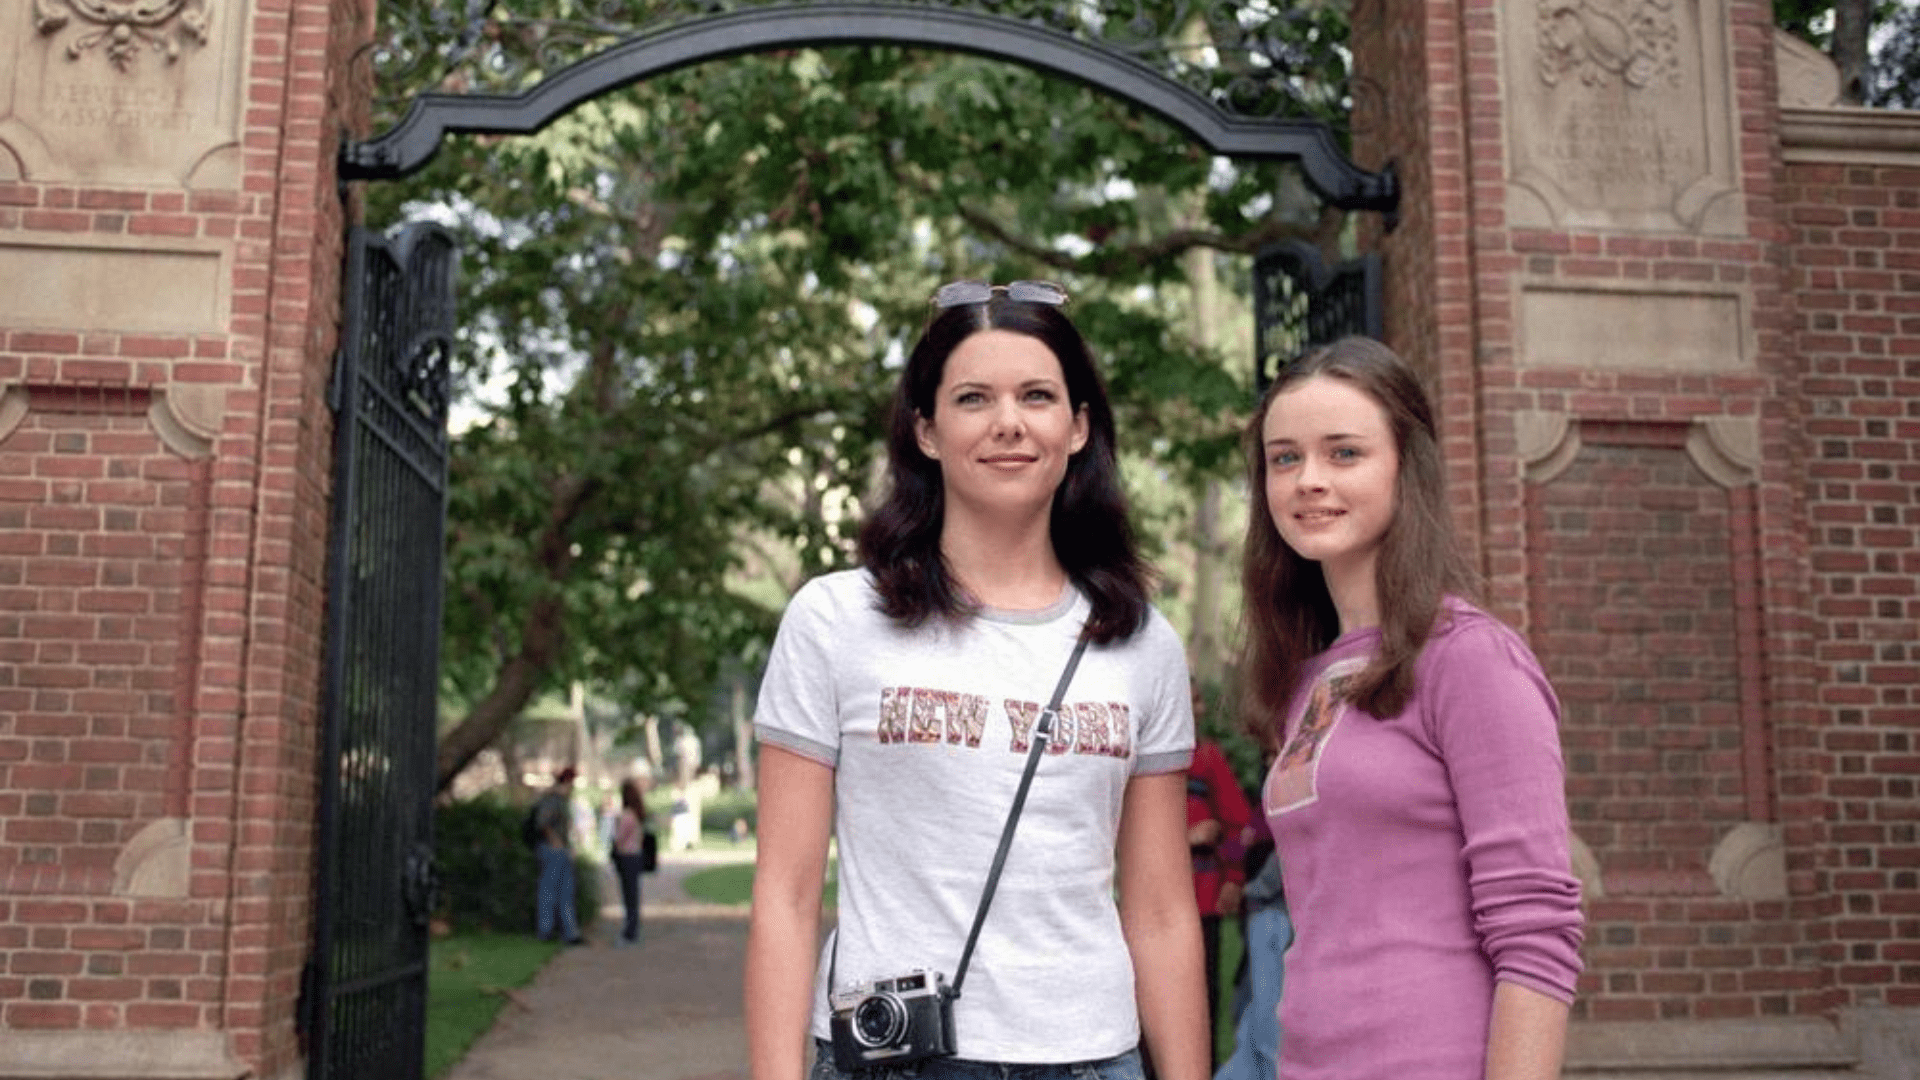 Books In Gilmore Girls Season 2 - Books Mentioned In Season 2 Of Gilmore Girls | Rory Gilmore Reading Challenge